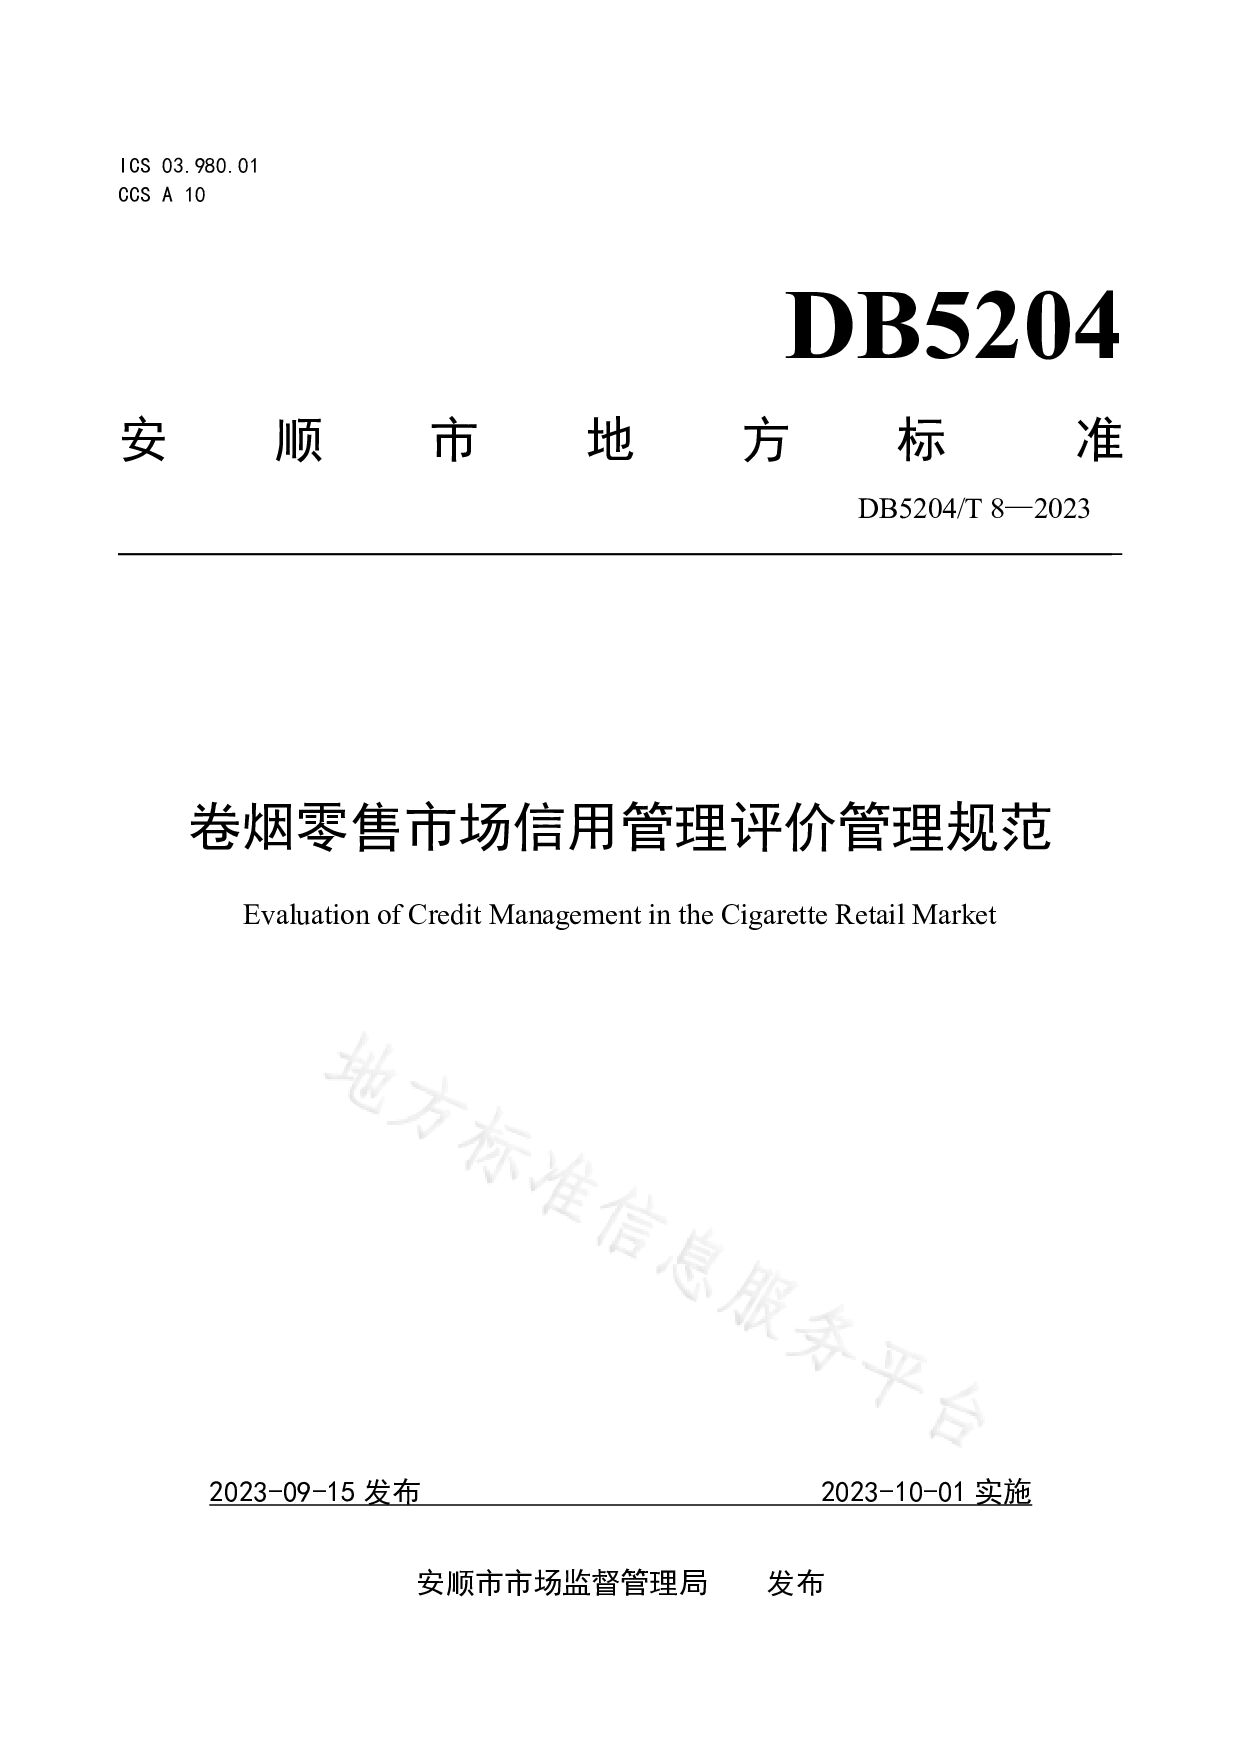 DB5204/T 8-2023